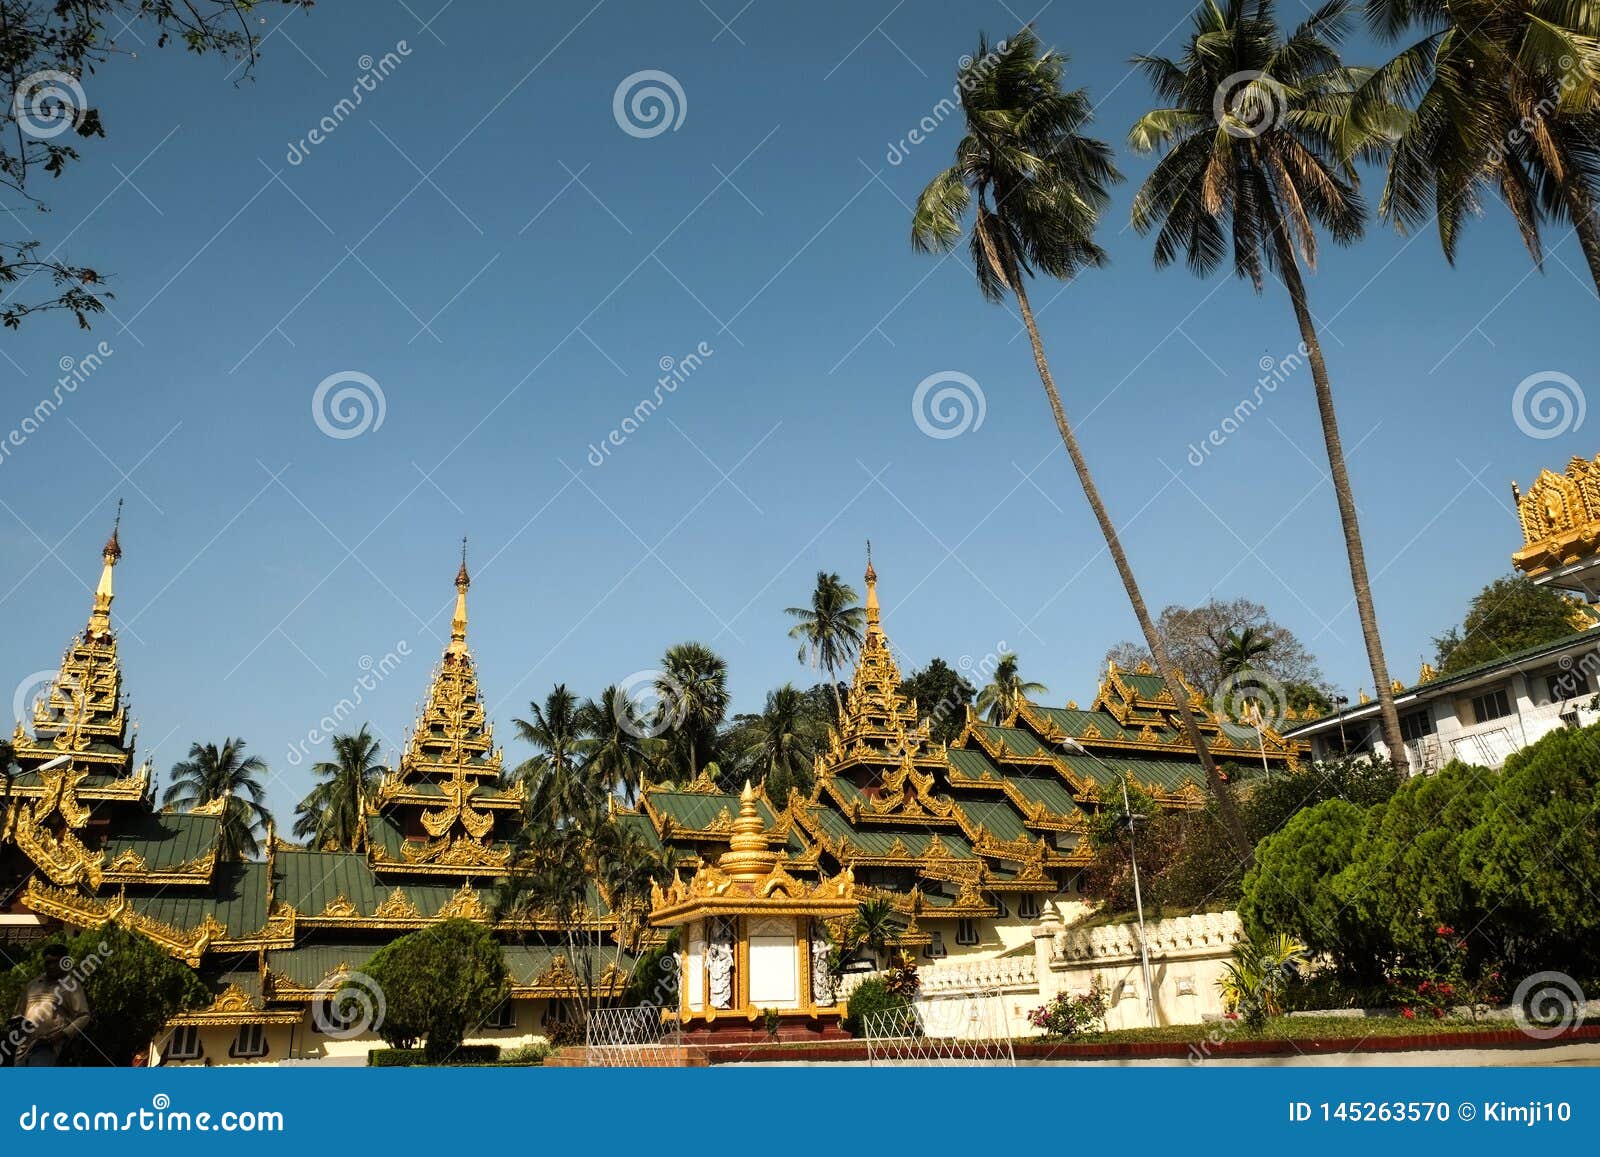 phra maha chedi pagoda located in the chiang kut hill area yangon city, myanmar